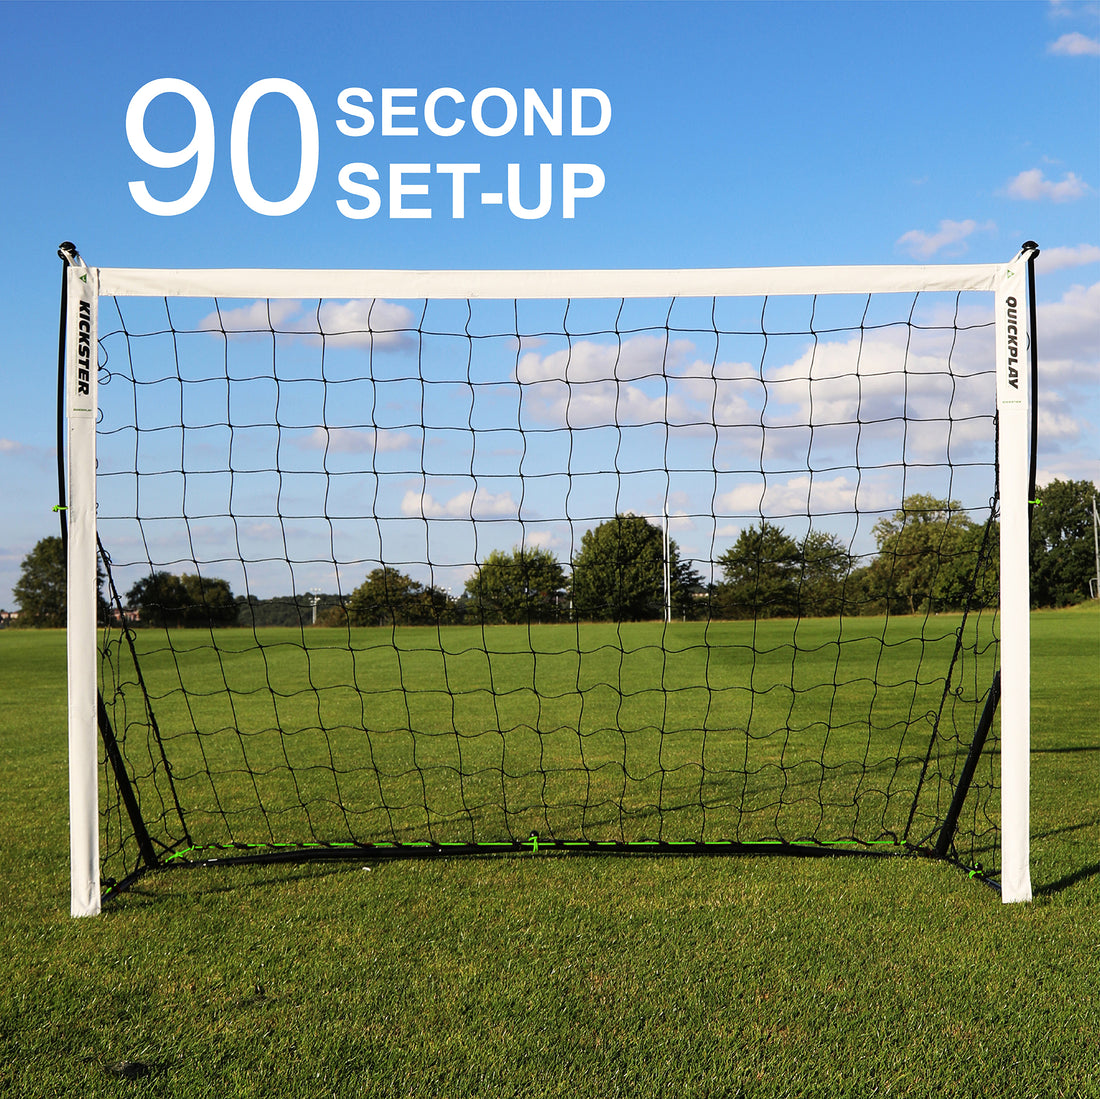 KICKSTER Portable Soccer Goal 8x5'